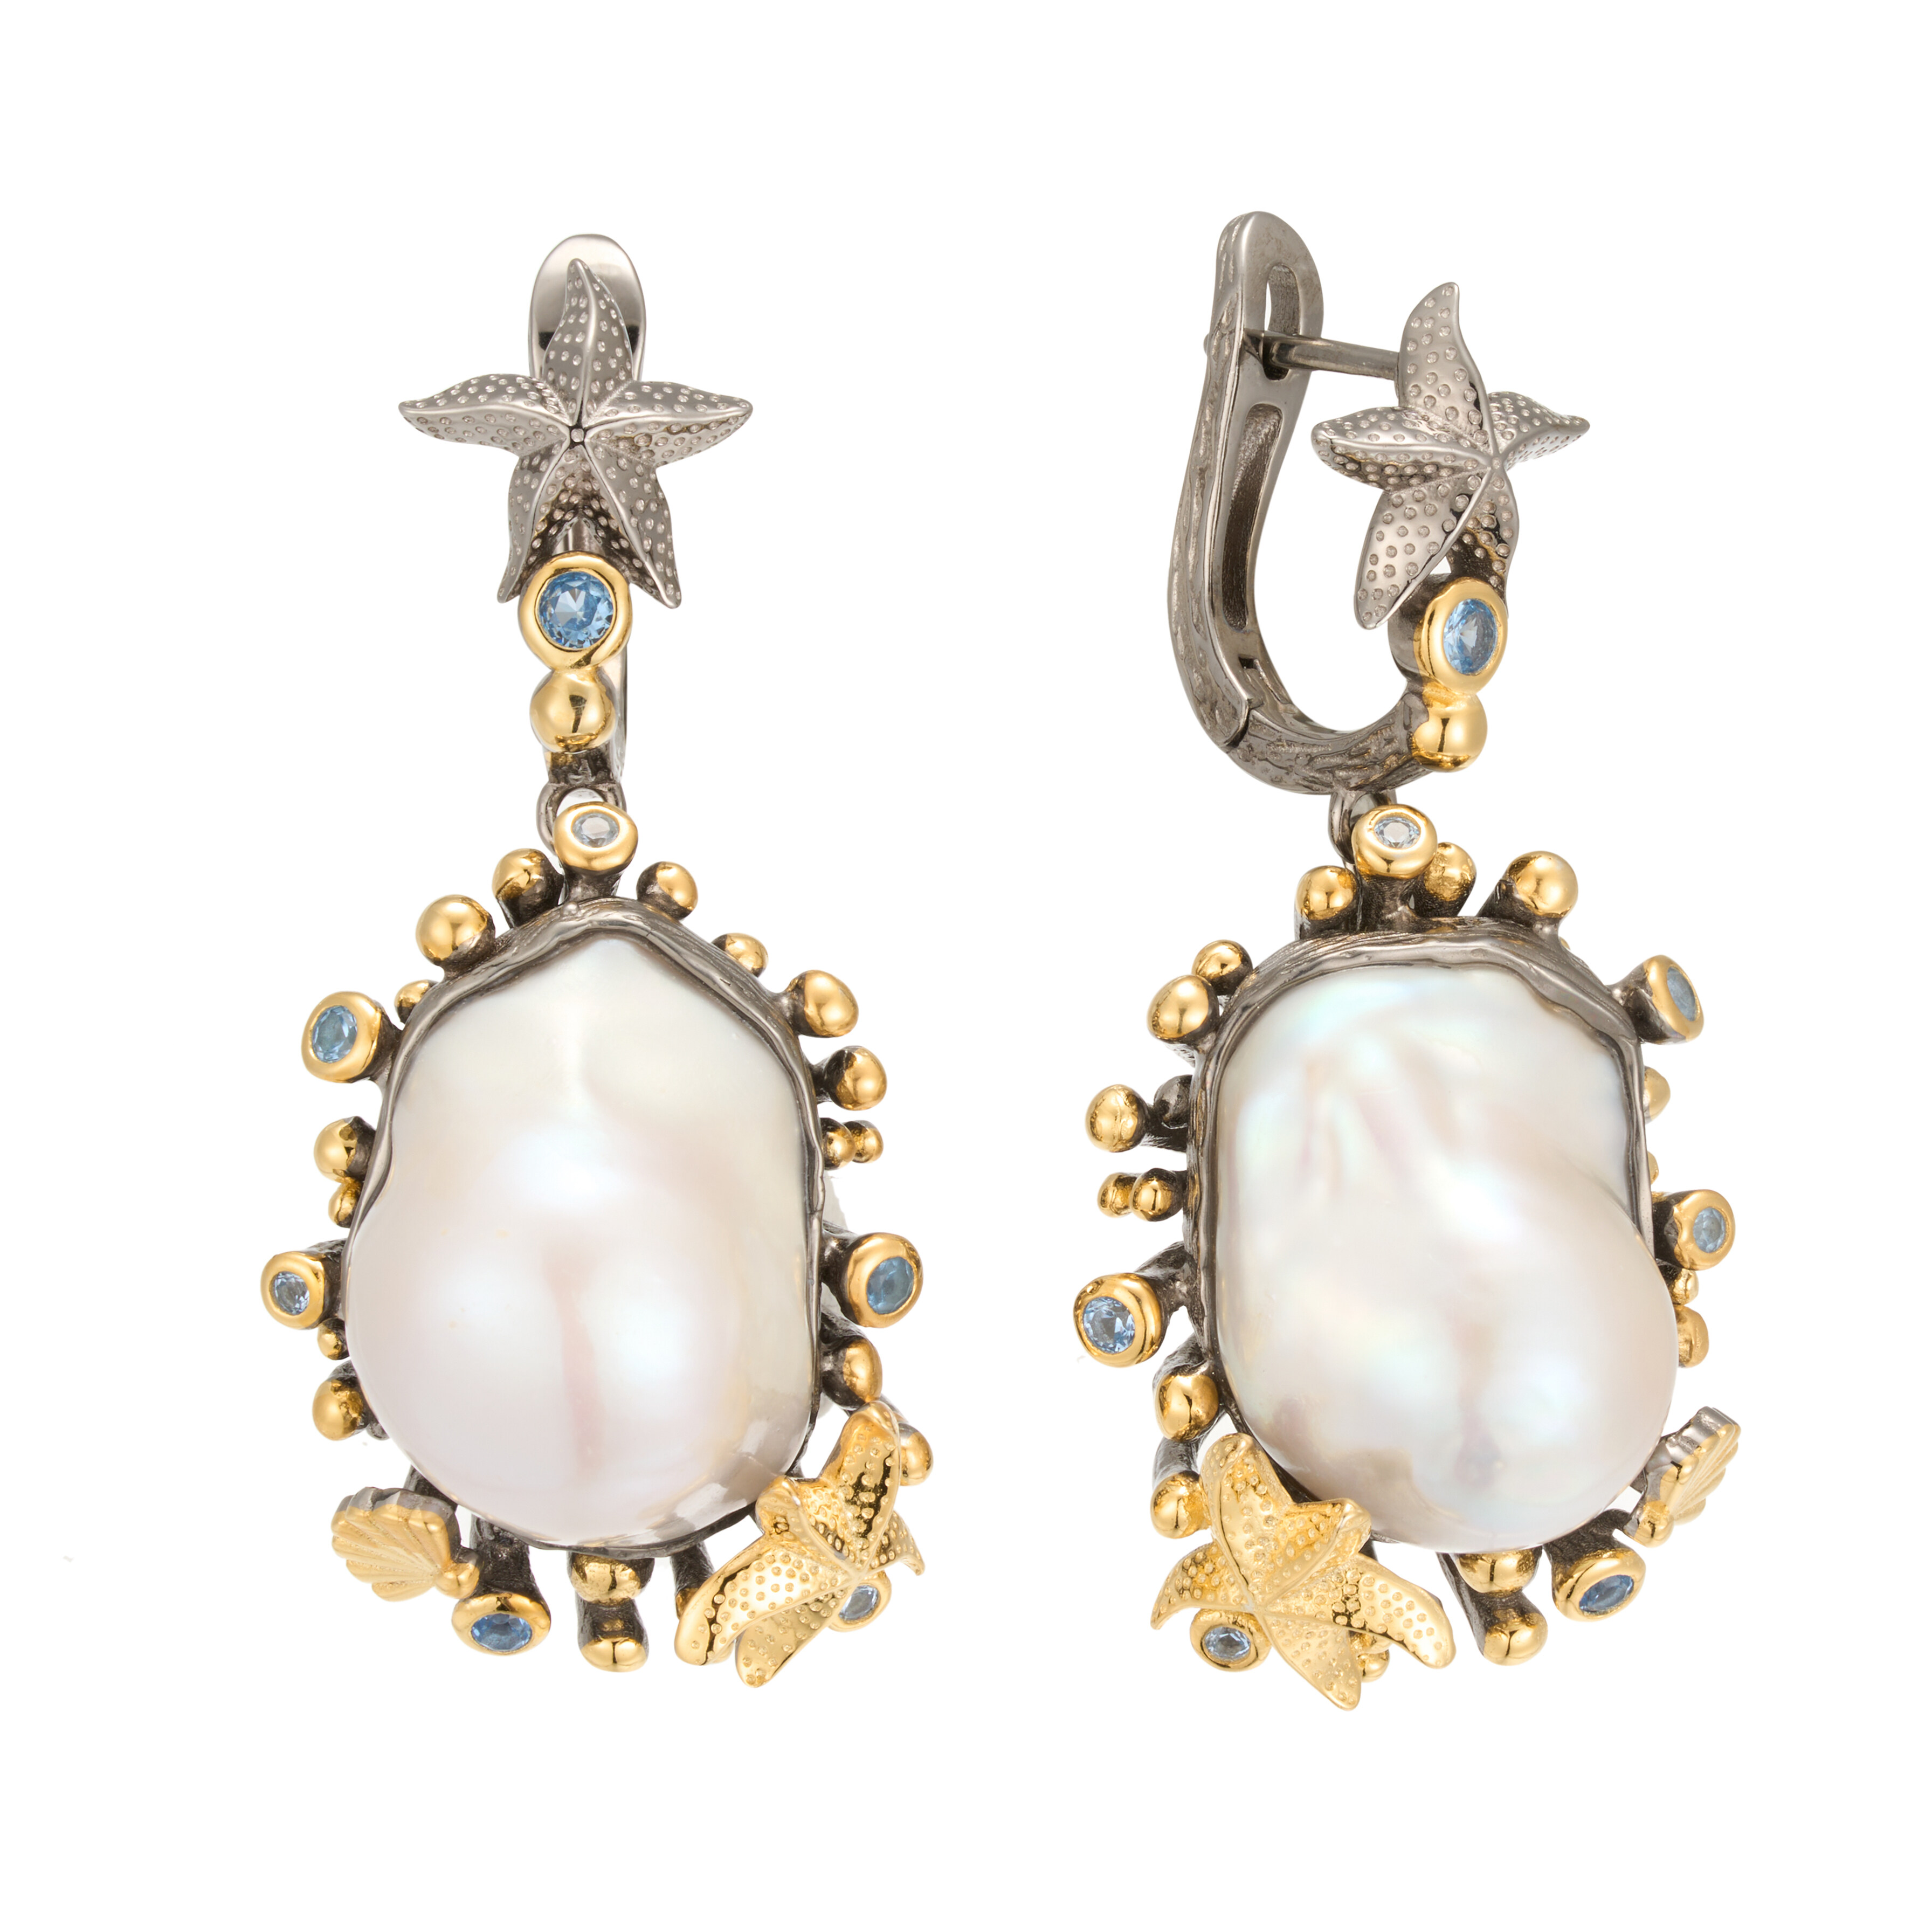 Handmade S925 Sterling Silver Baroque Pearl Earrings European and American Ins Retro Earrings Jewelry